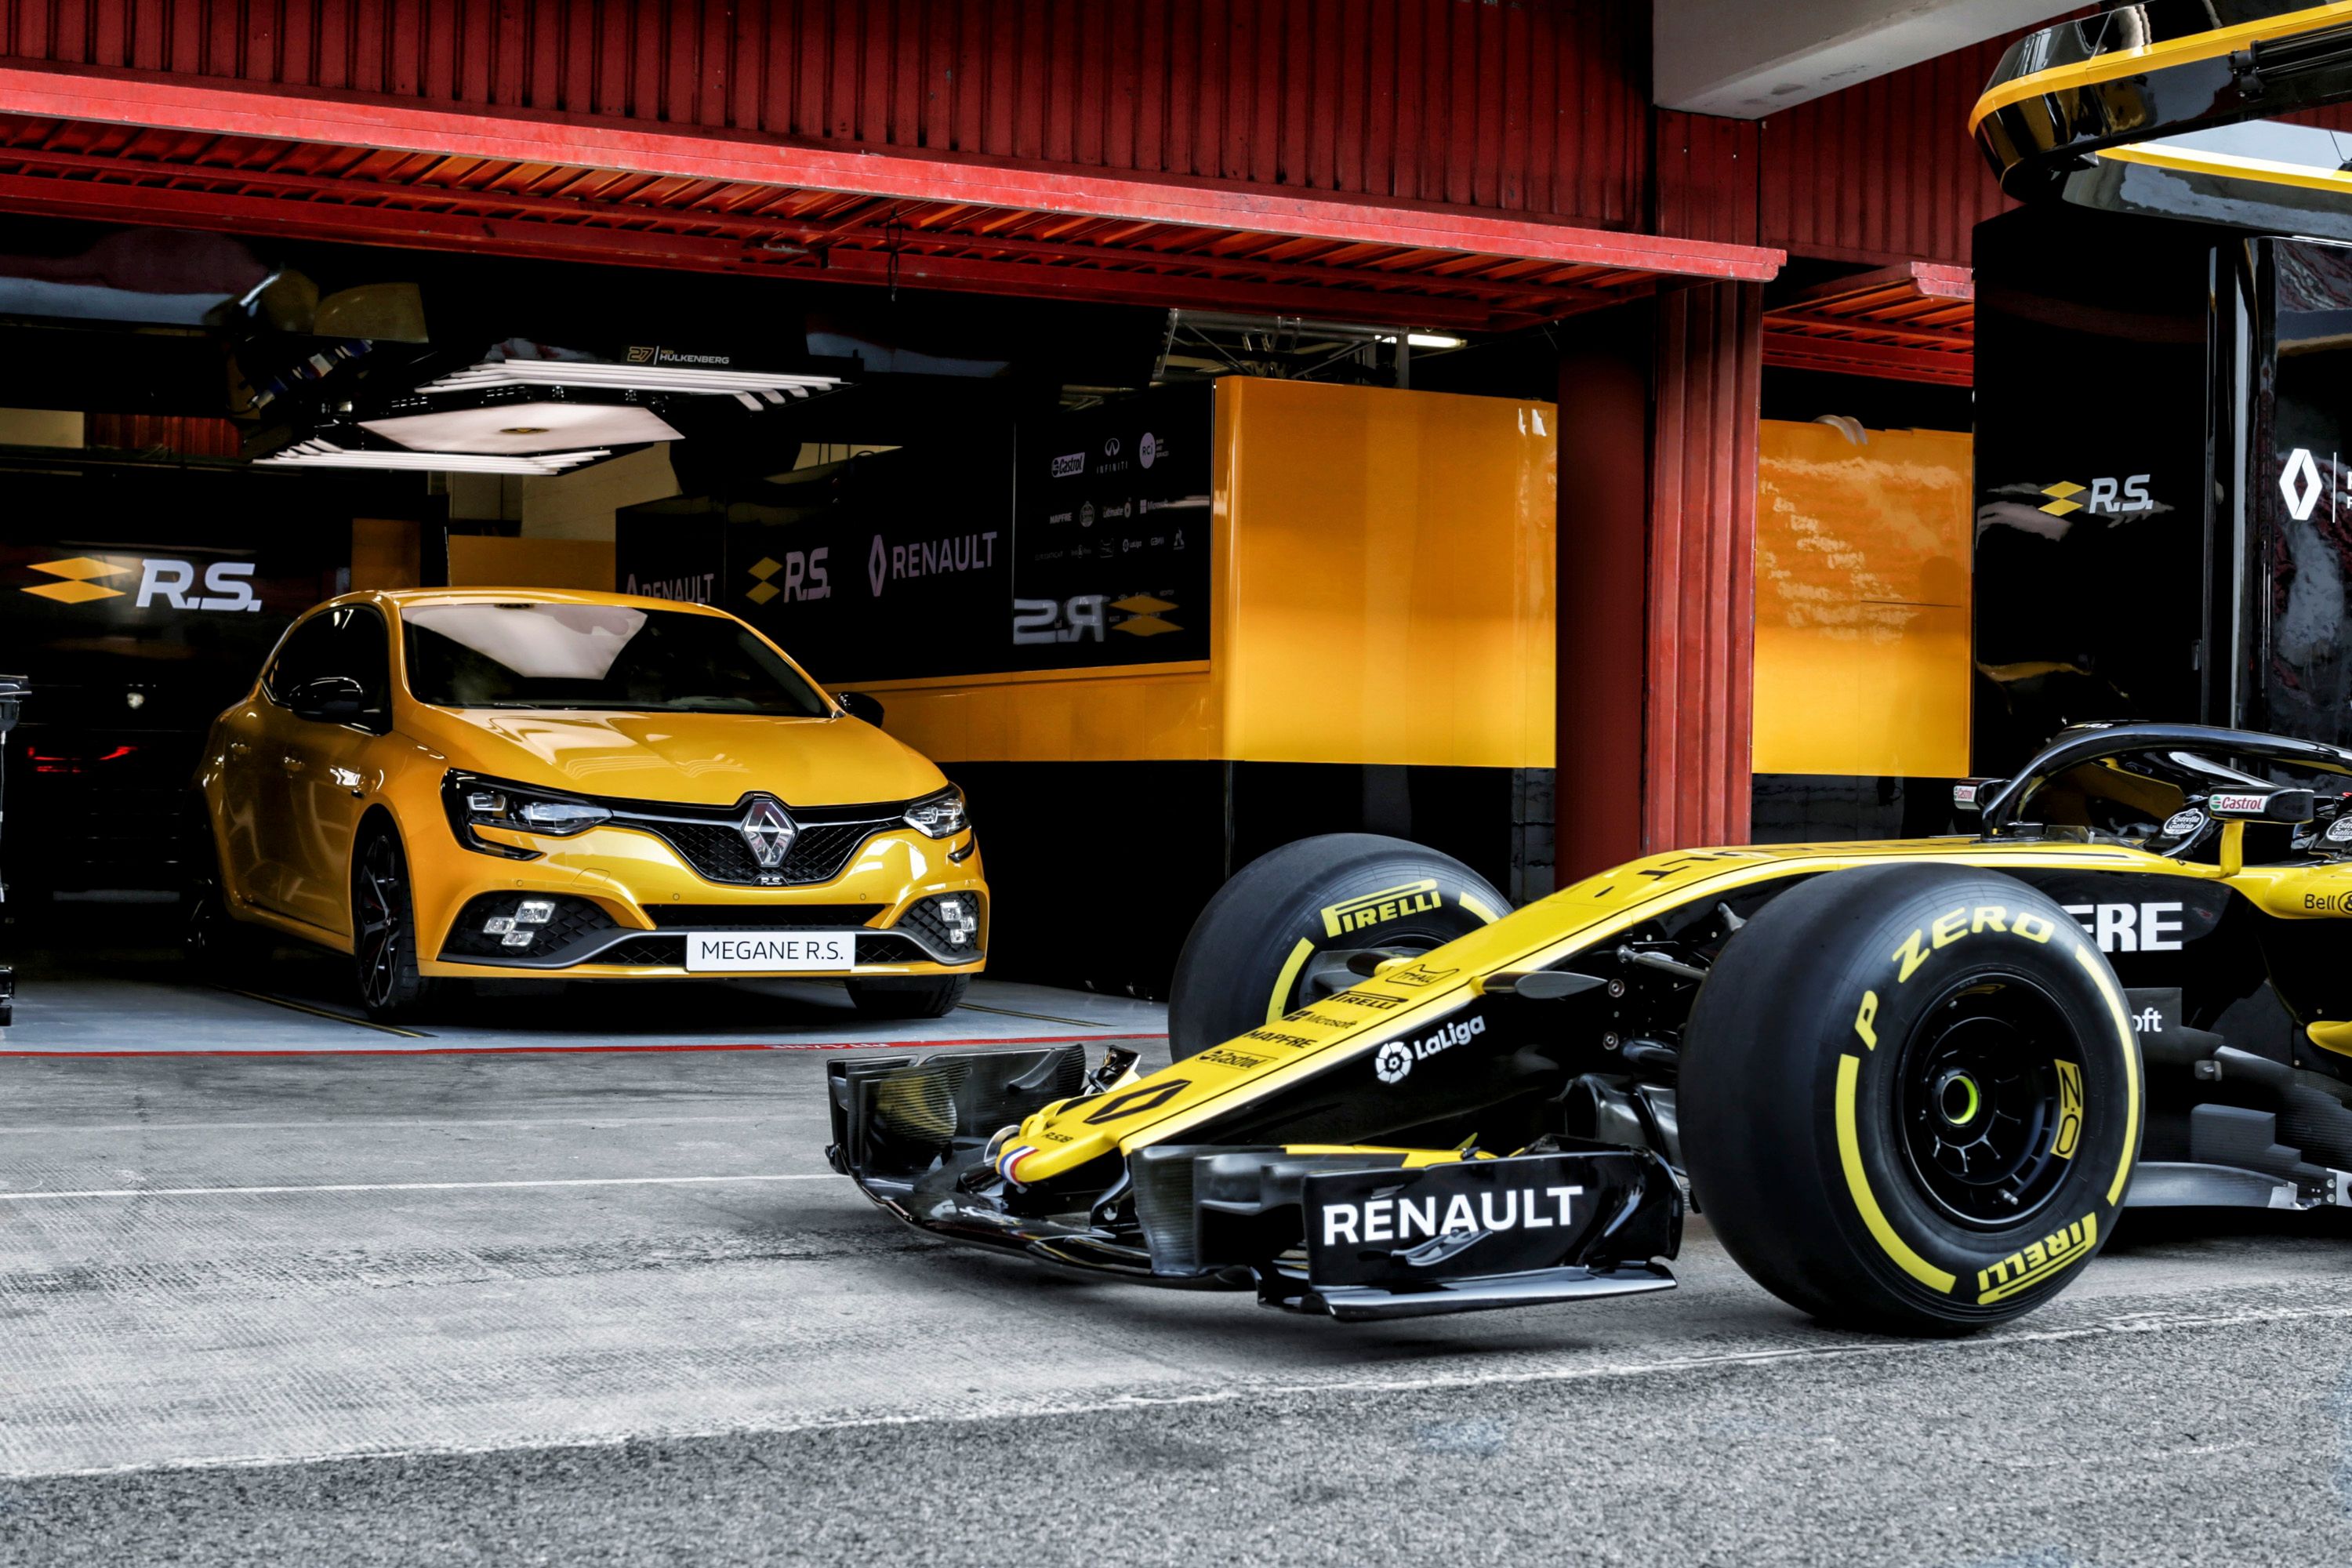 2018 Renault Mégane R.S. Trophy